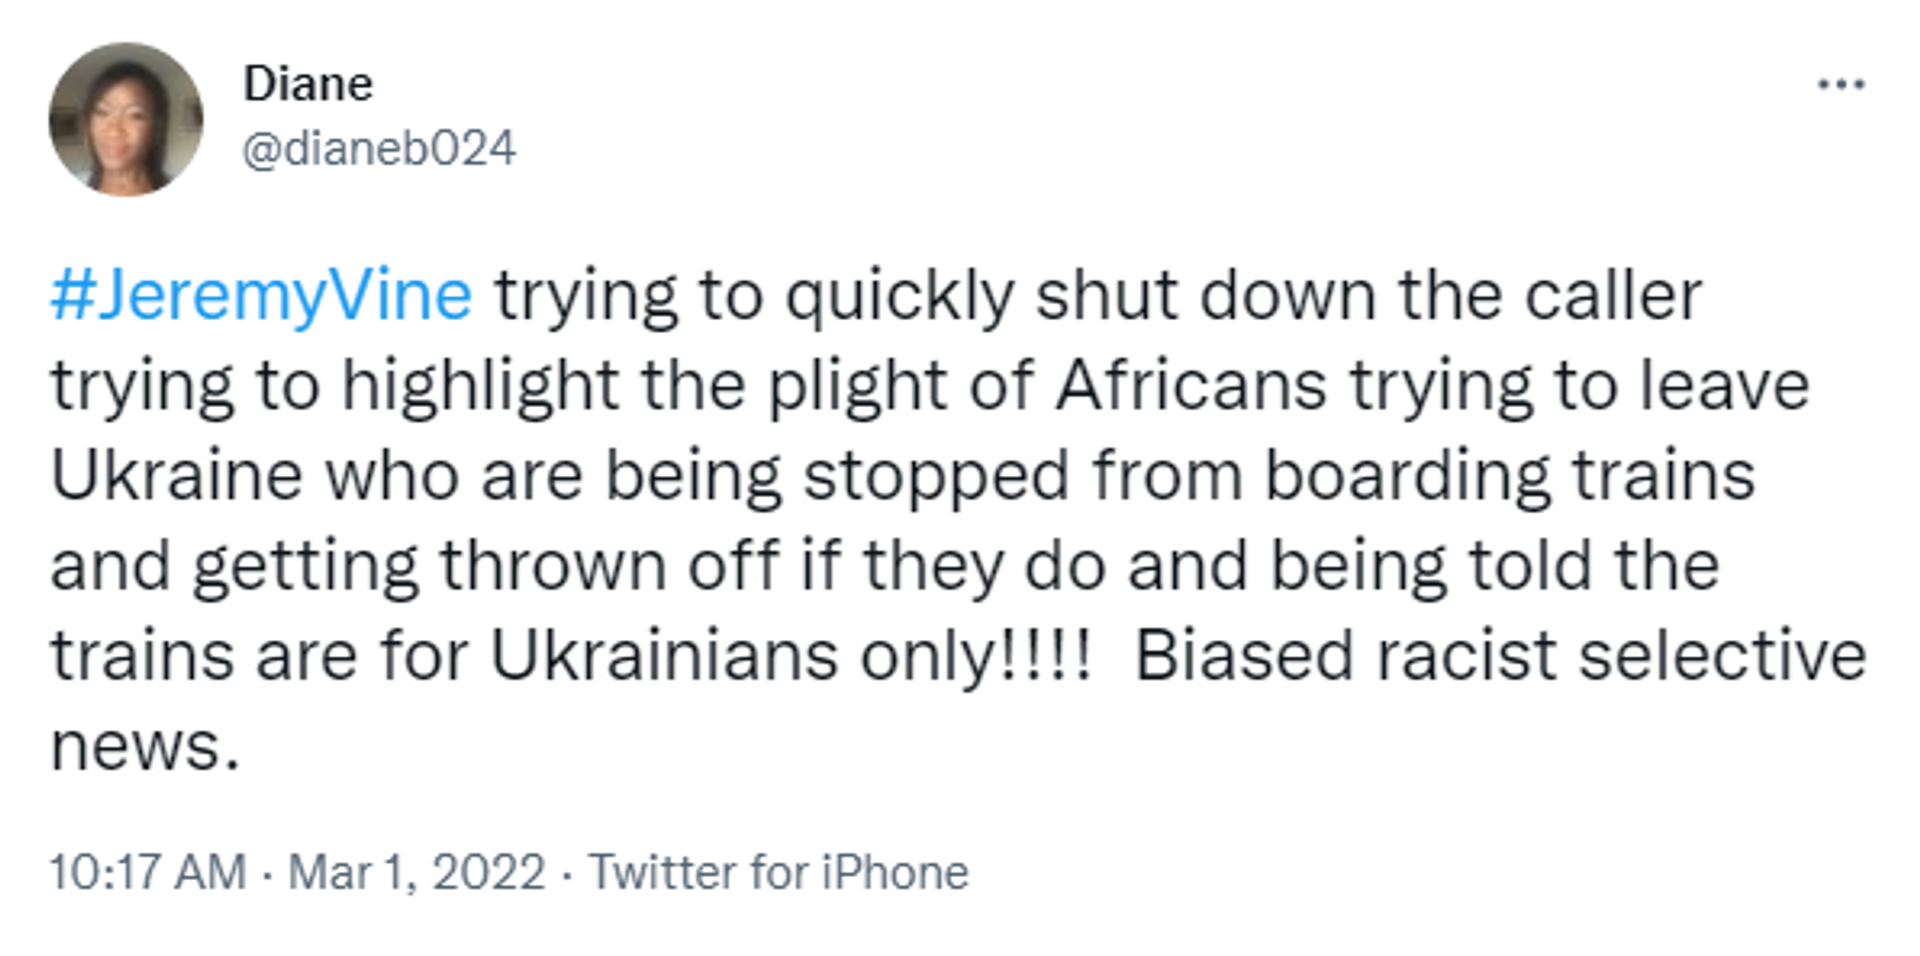 Tweet criticising Jeremy Vine for downplaying mistreatment of Africans by Ukrainian authorities - Sputnik International, 1920, 03.03.2022